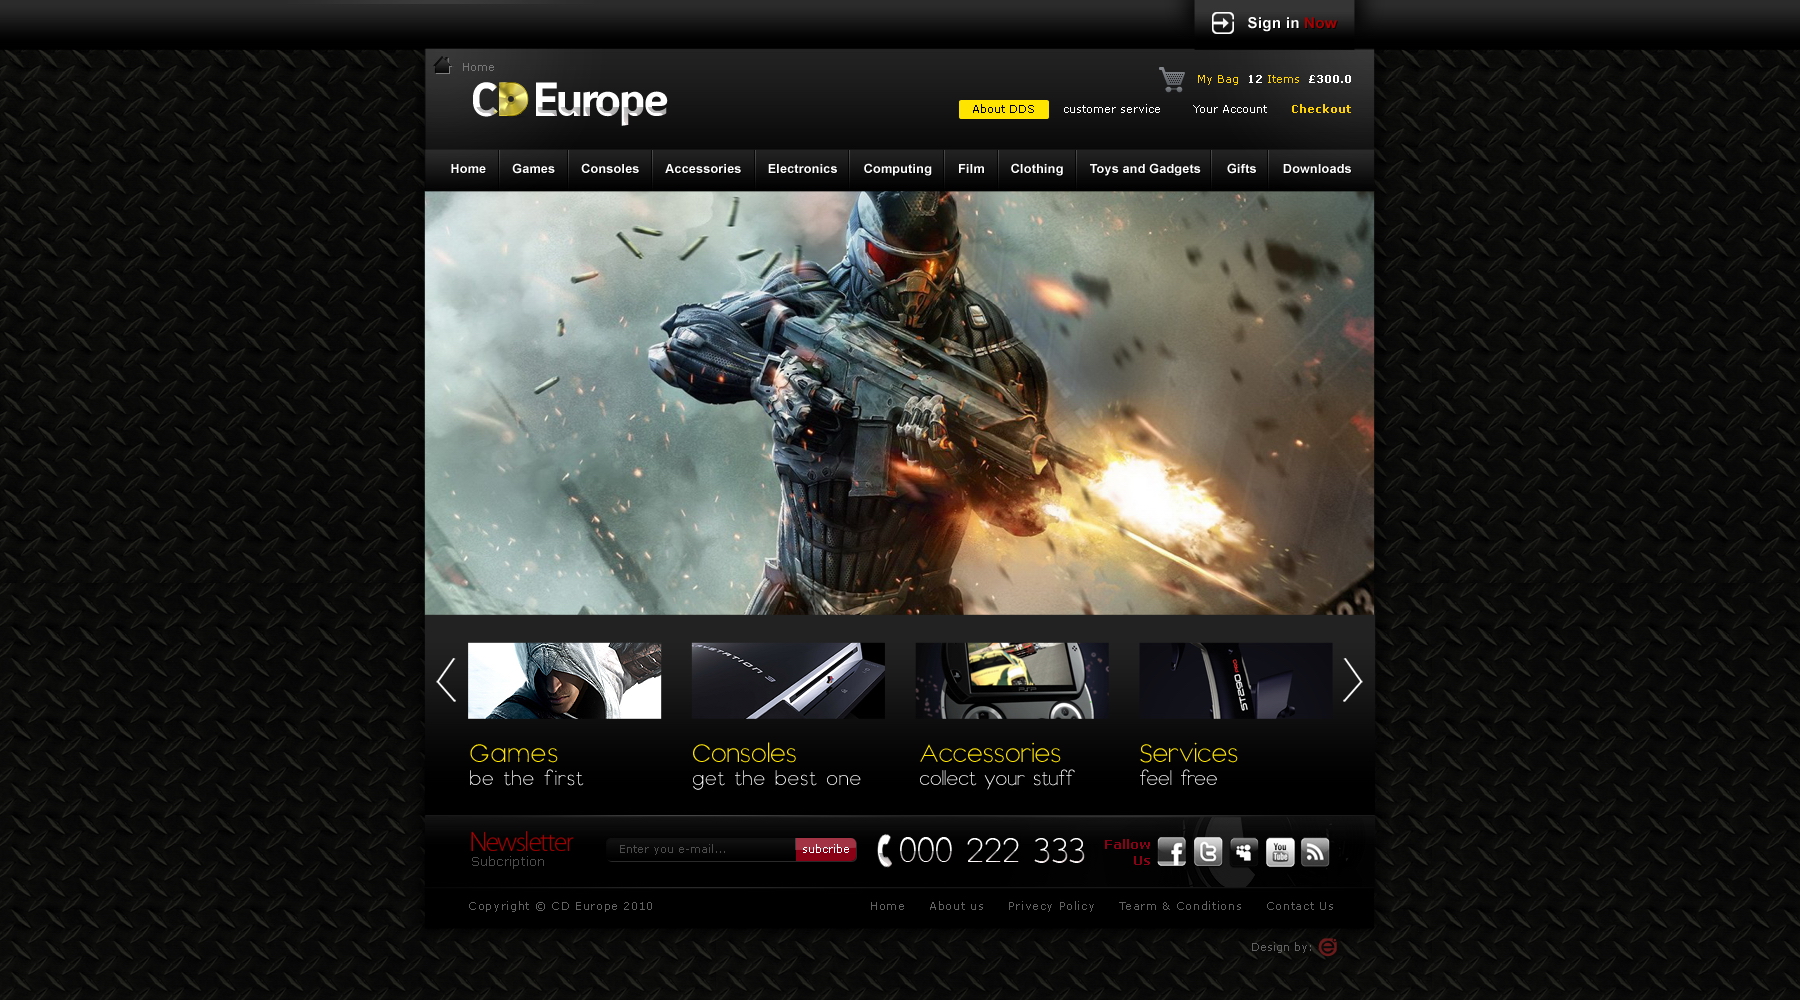 Cd Europe gaming website design by Dexign-Oxigen on DeviantArt